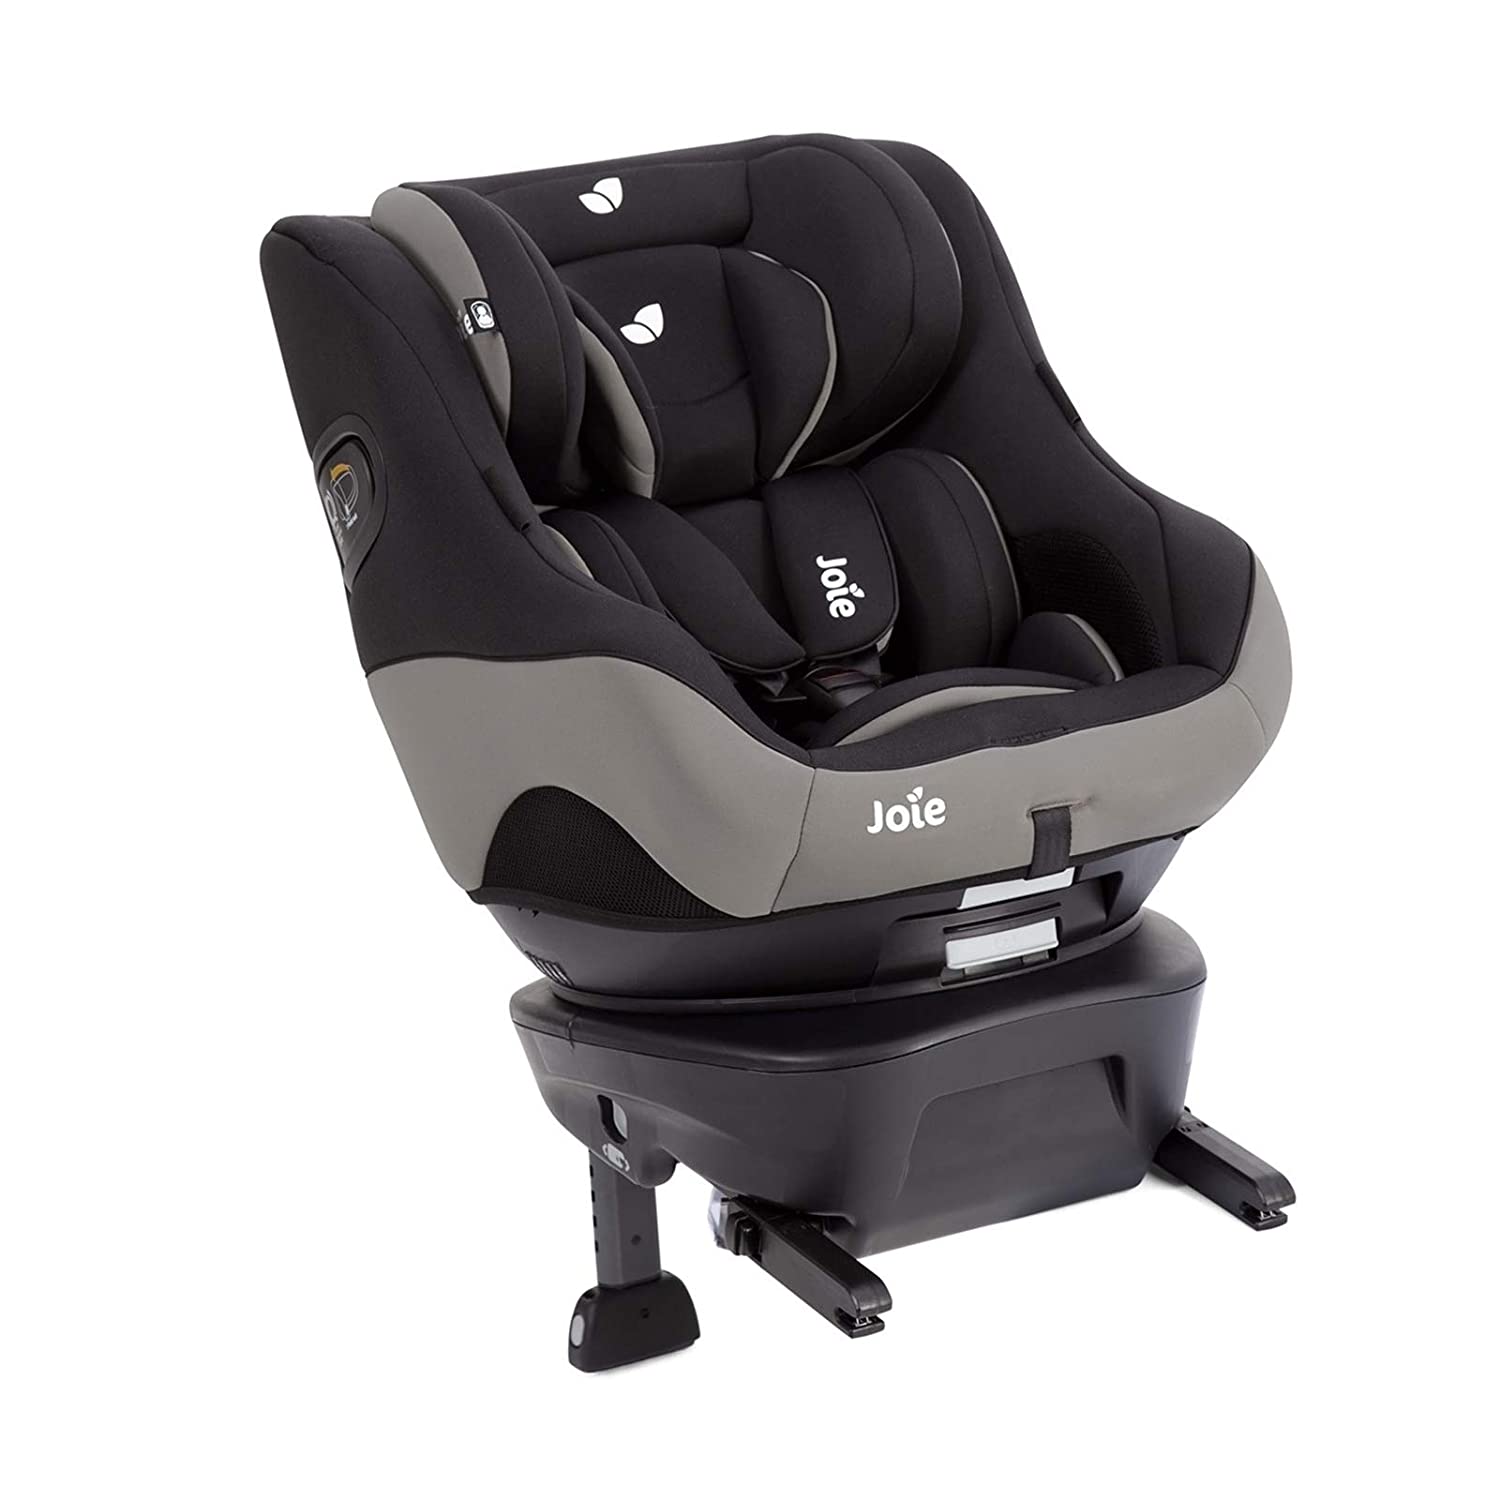 Joie SpinSafe C1416ZABPP000 Reboard Child Car Seat ECE Group 0+/1 Black Pepper